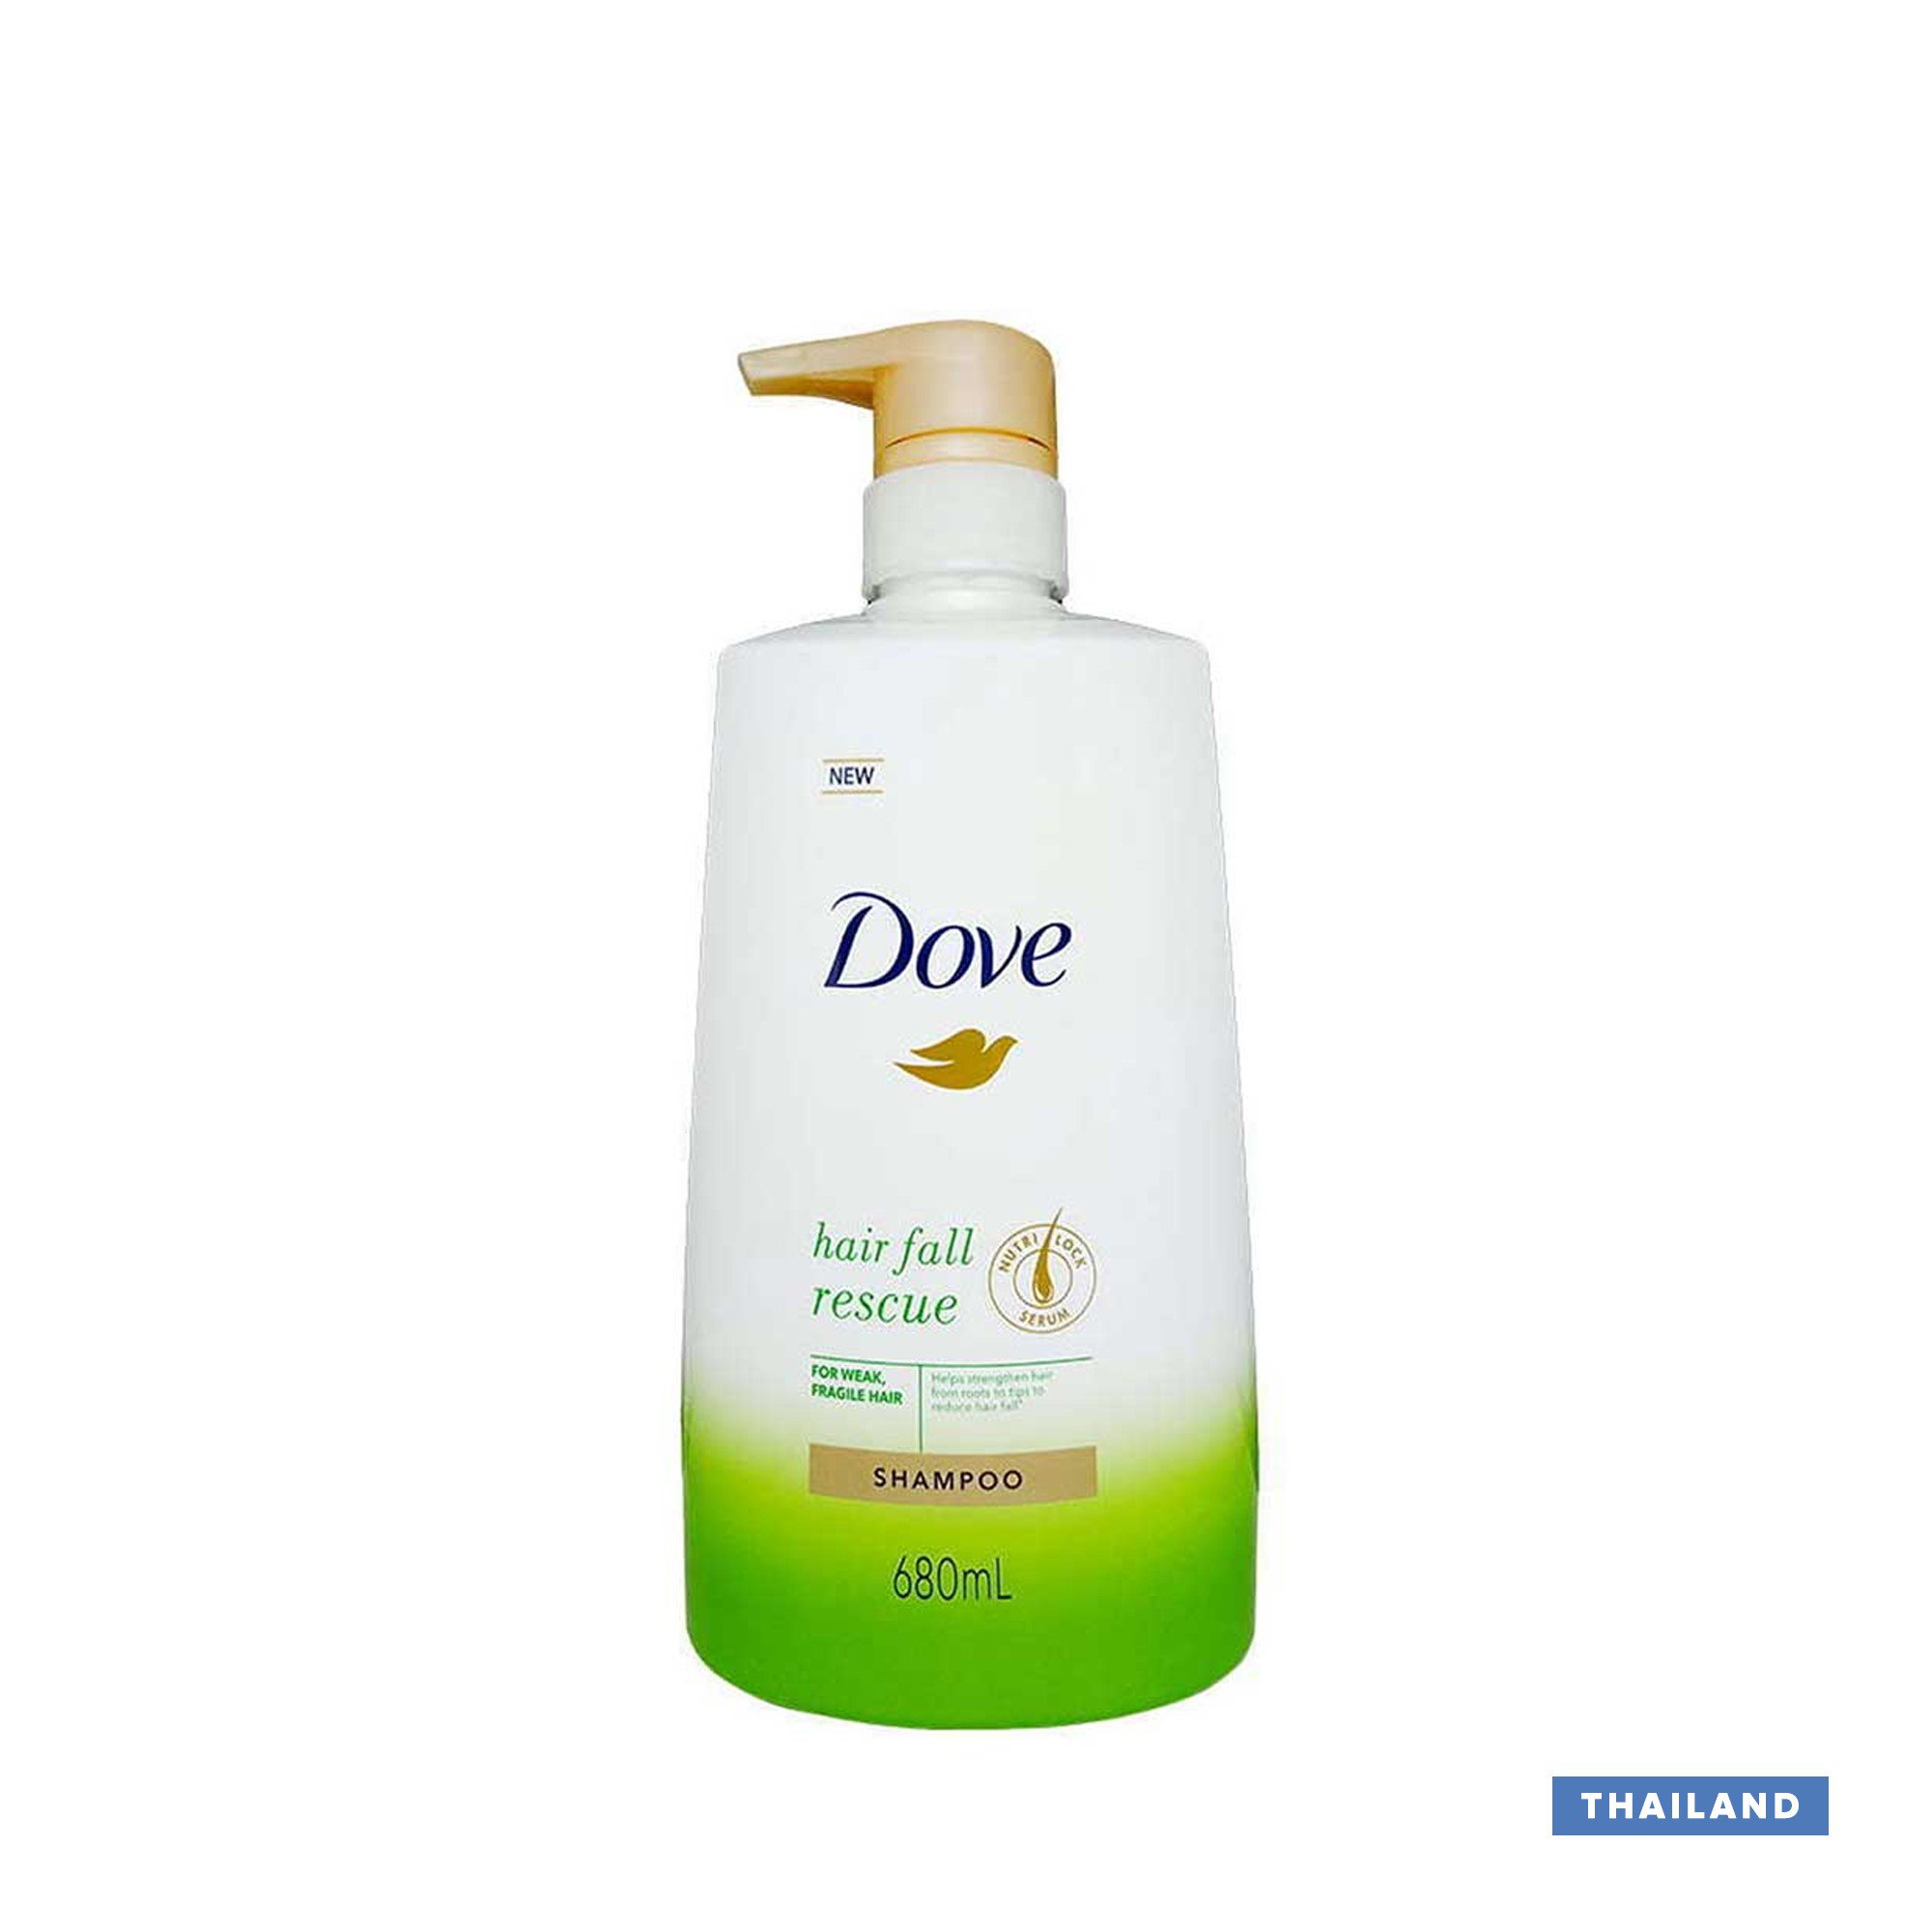 Dove Hair Fall Rescue Shampoo - 680ml (Thailand) | MARKETPLACE